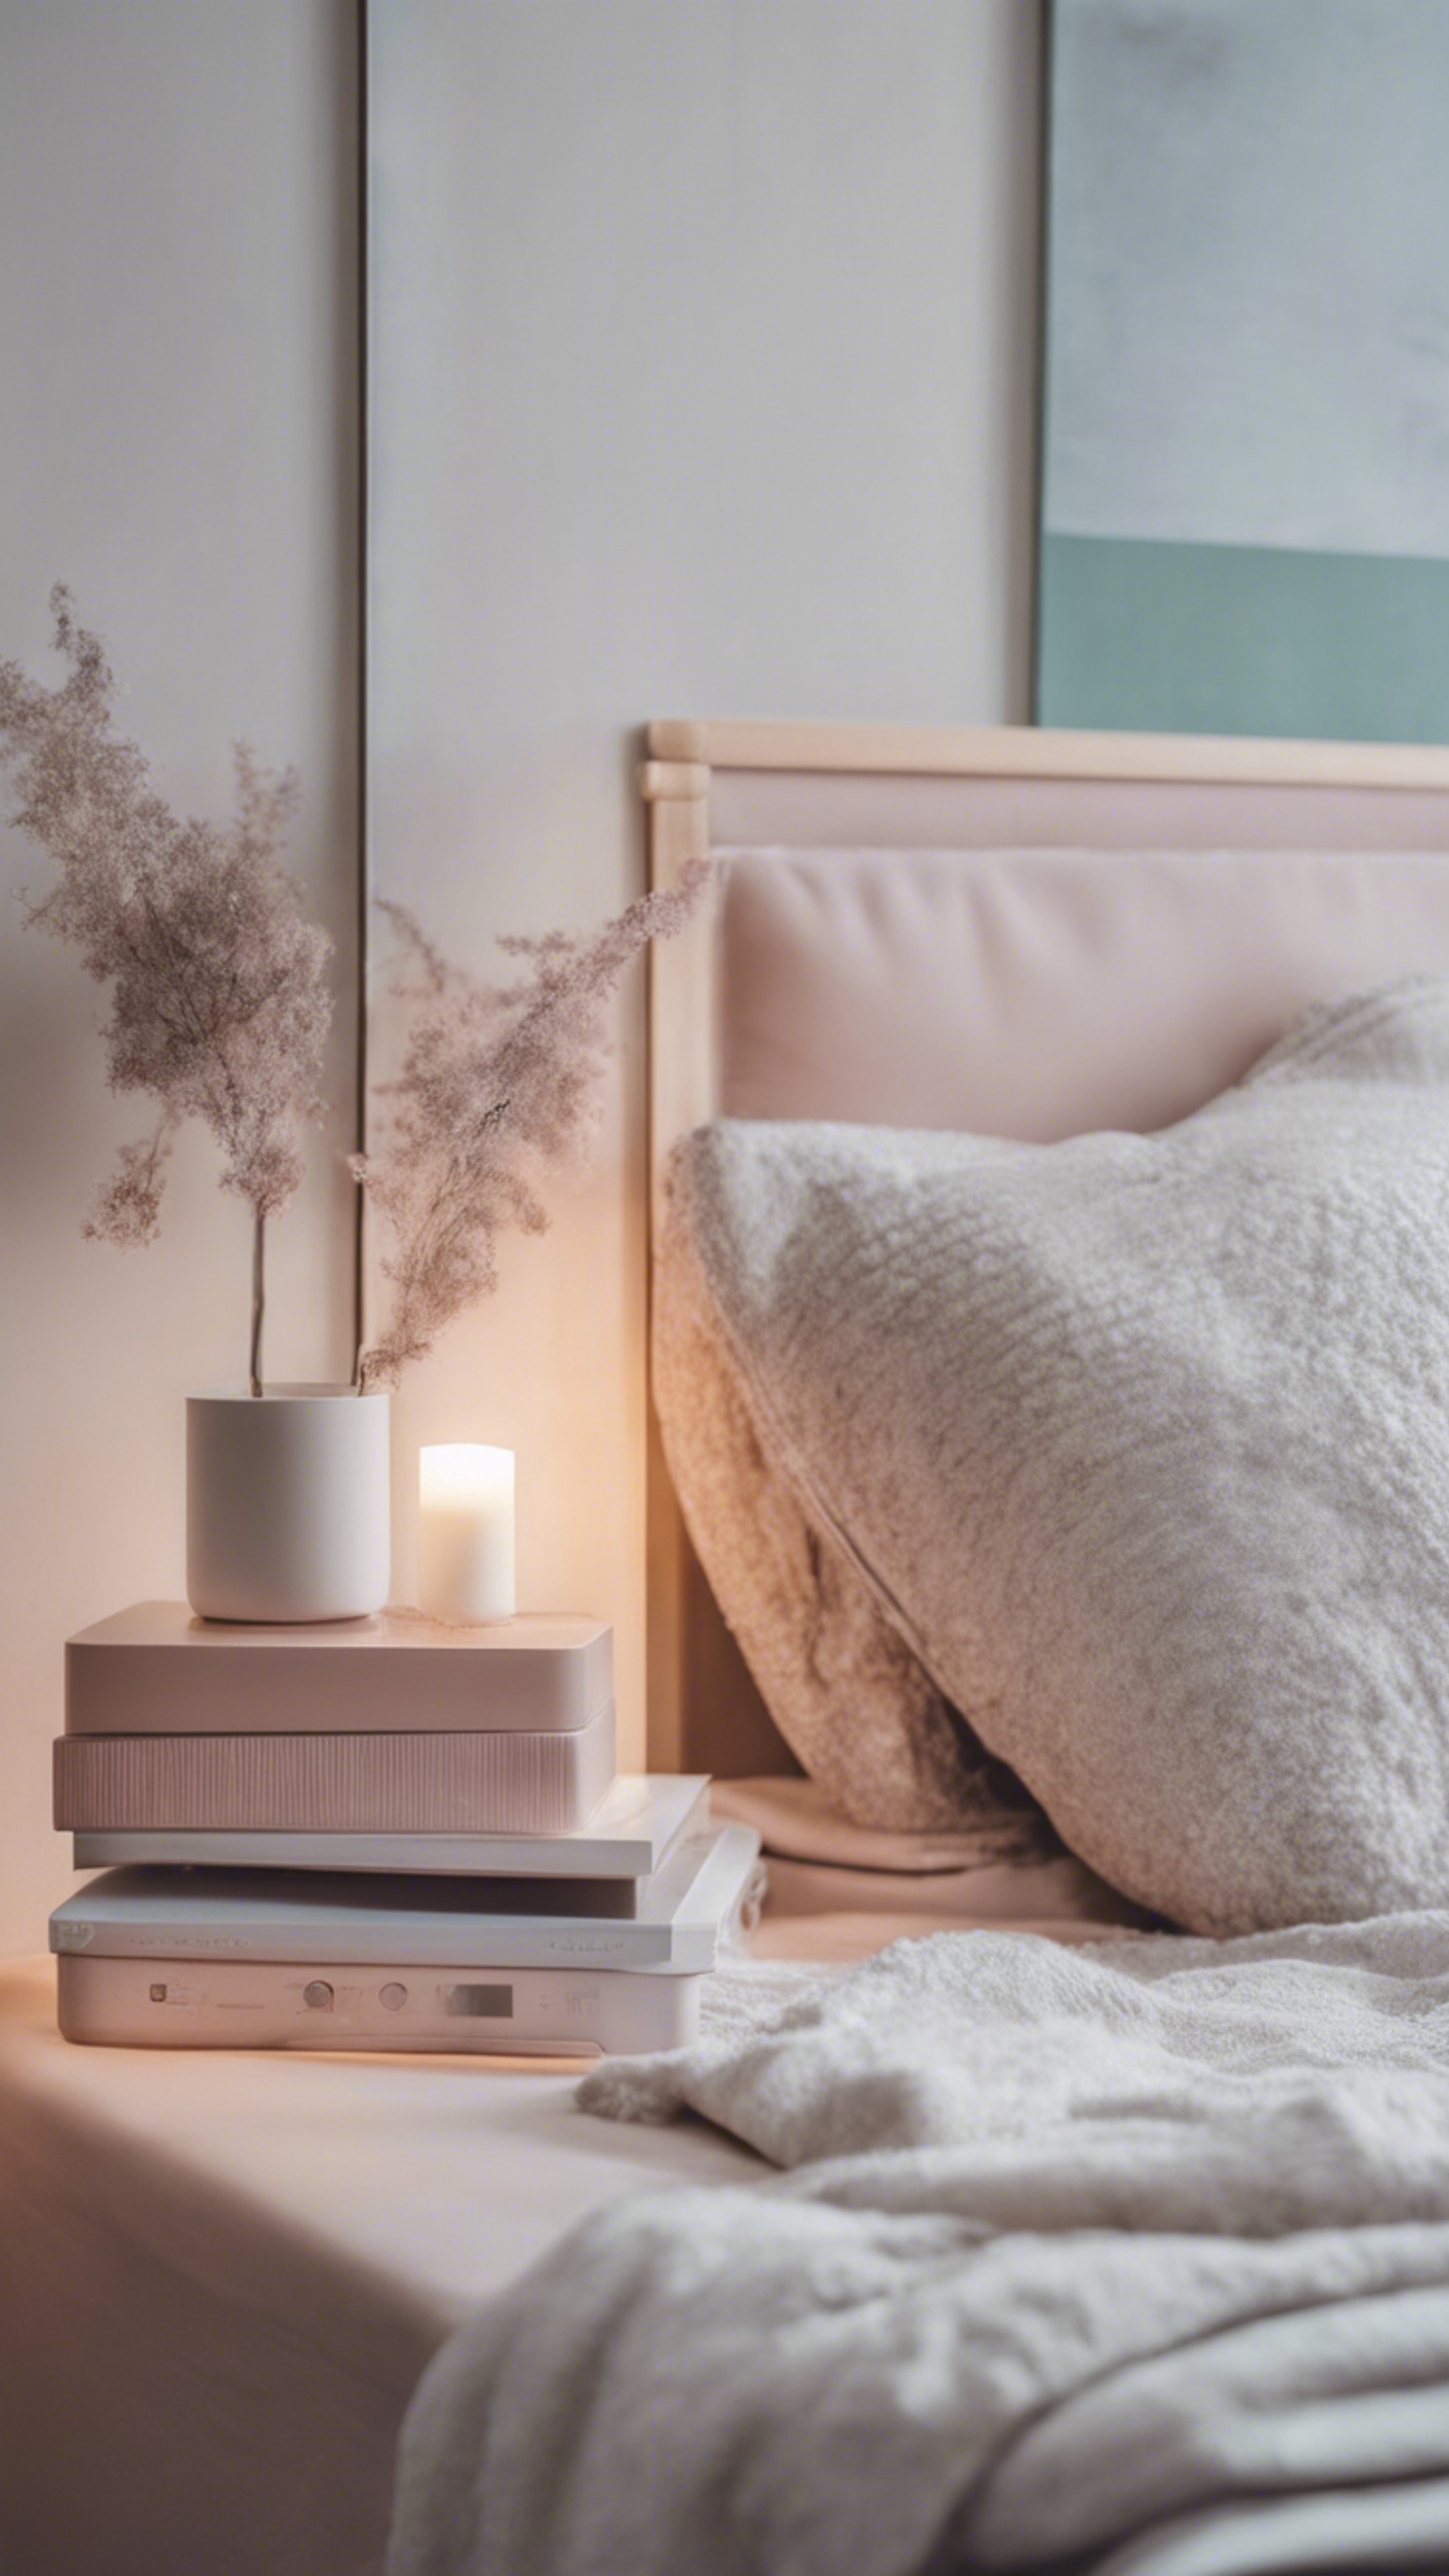 A modern minimalist bedroom in pastel hues with cozy blankets and a stylish bedside table. duvar kağıdı[e12df14007a0419d89d8]